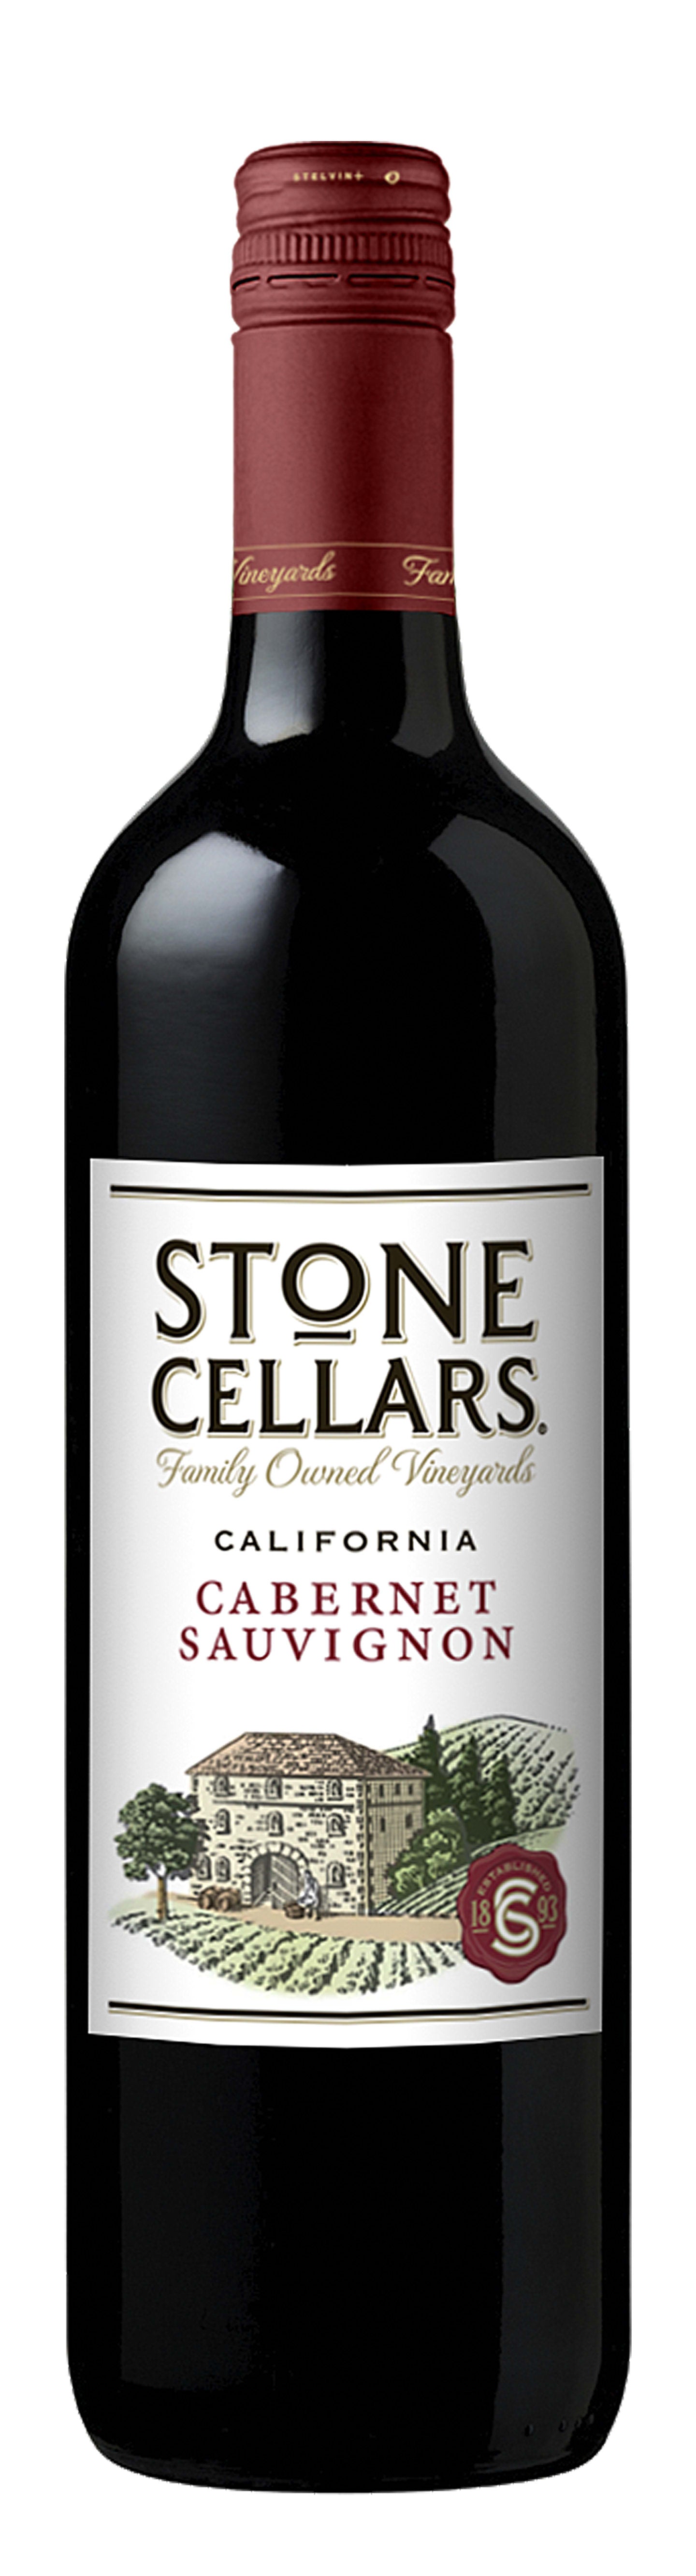 Stone Cellars Cabernet Sauvignon 2017